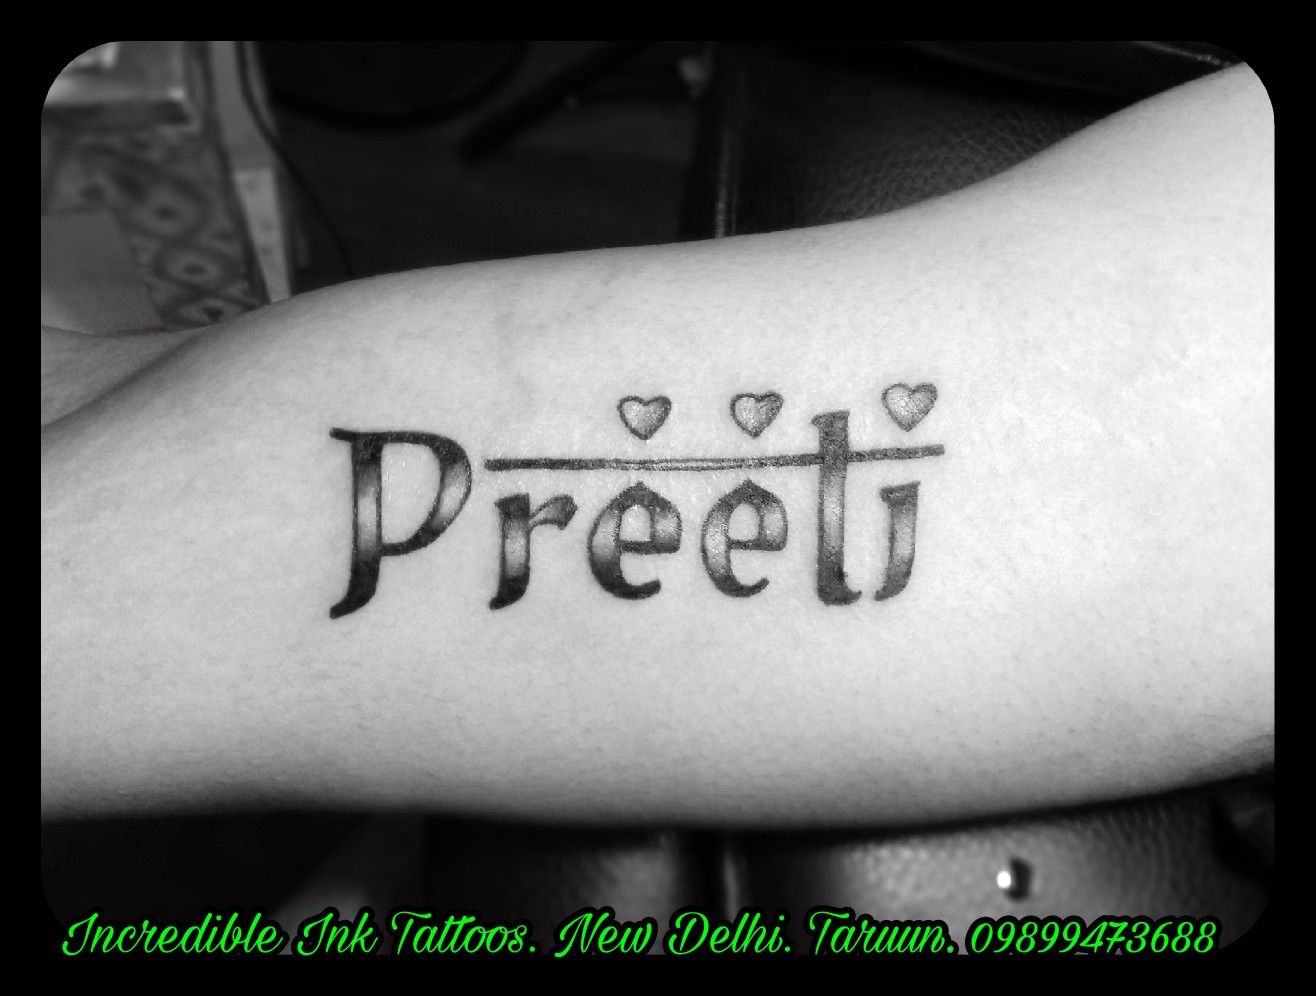 Preeti Name Tattoo On Hand - 1316x996 Wallpaper 